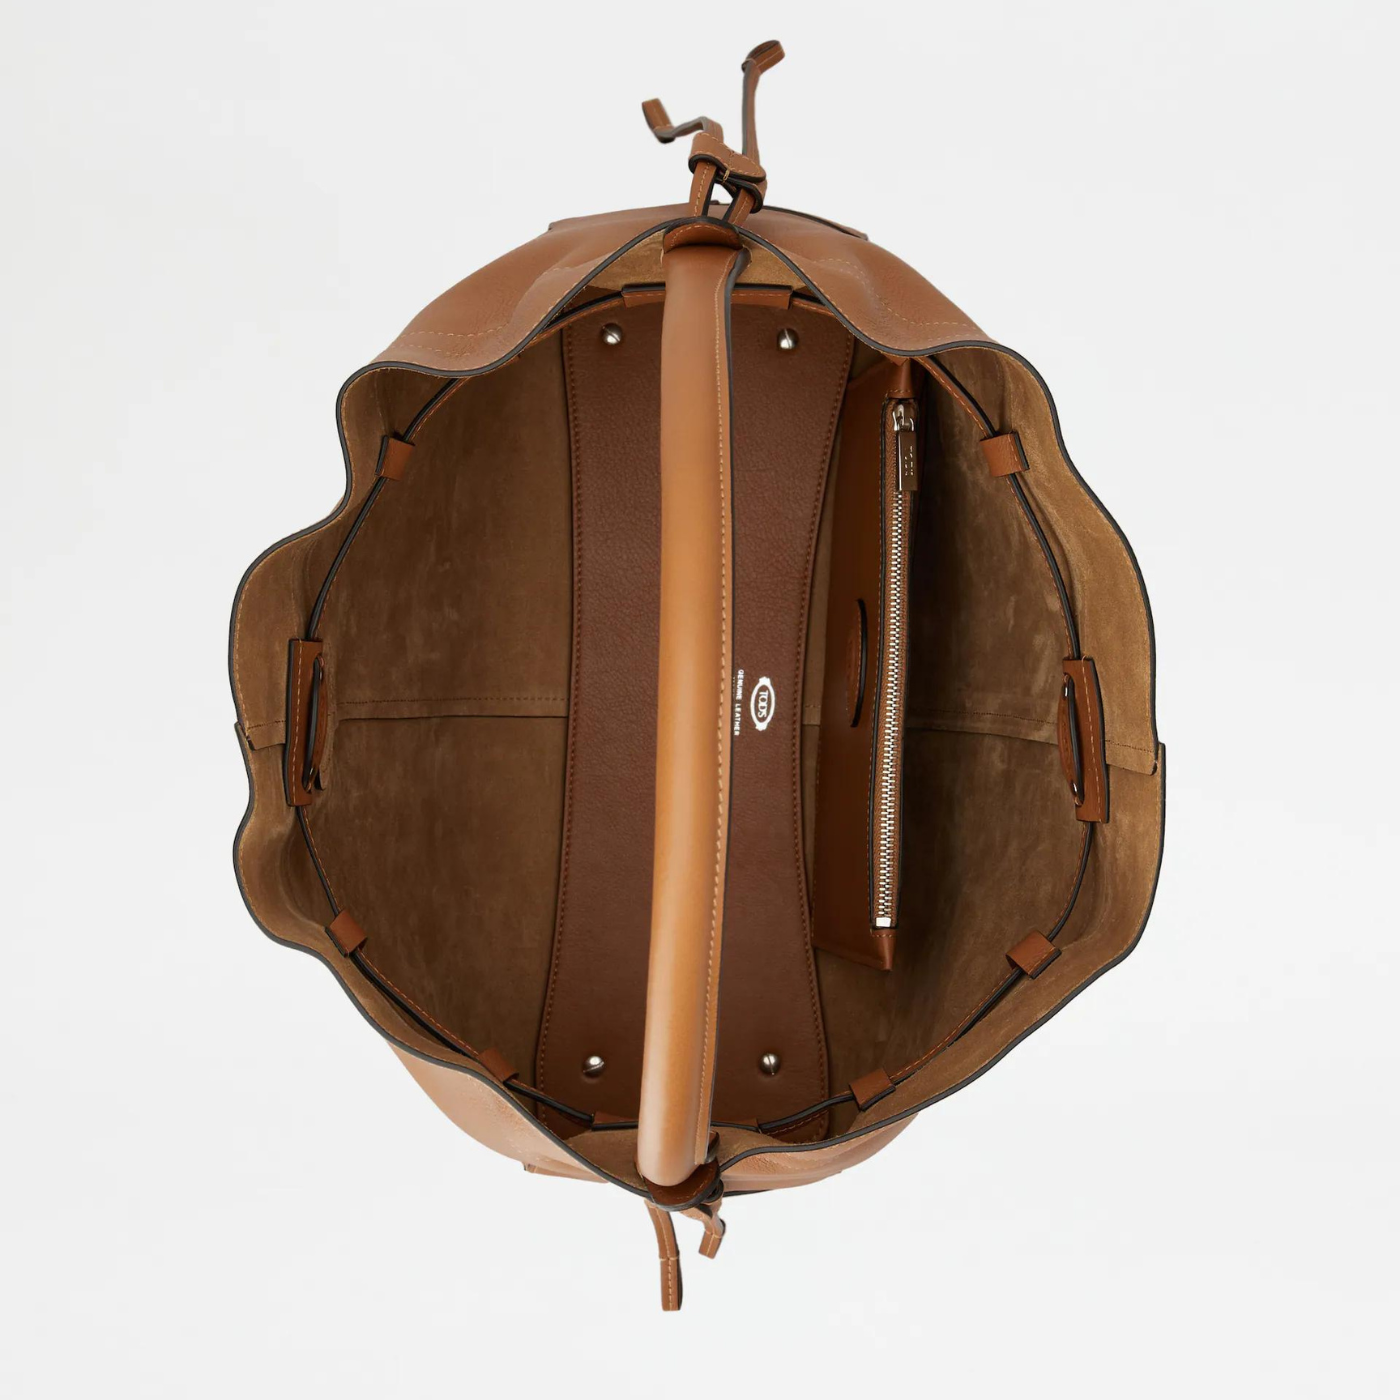 Di Bag Bucket Bag in Leather Medium with Drawstring in Tan Handbags TOD'S - LOLAMIR